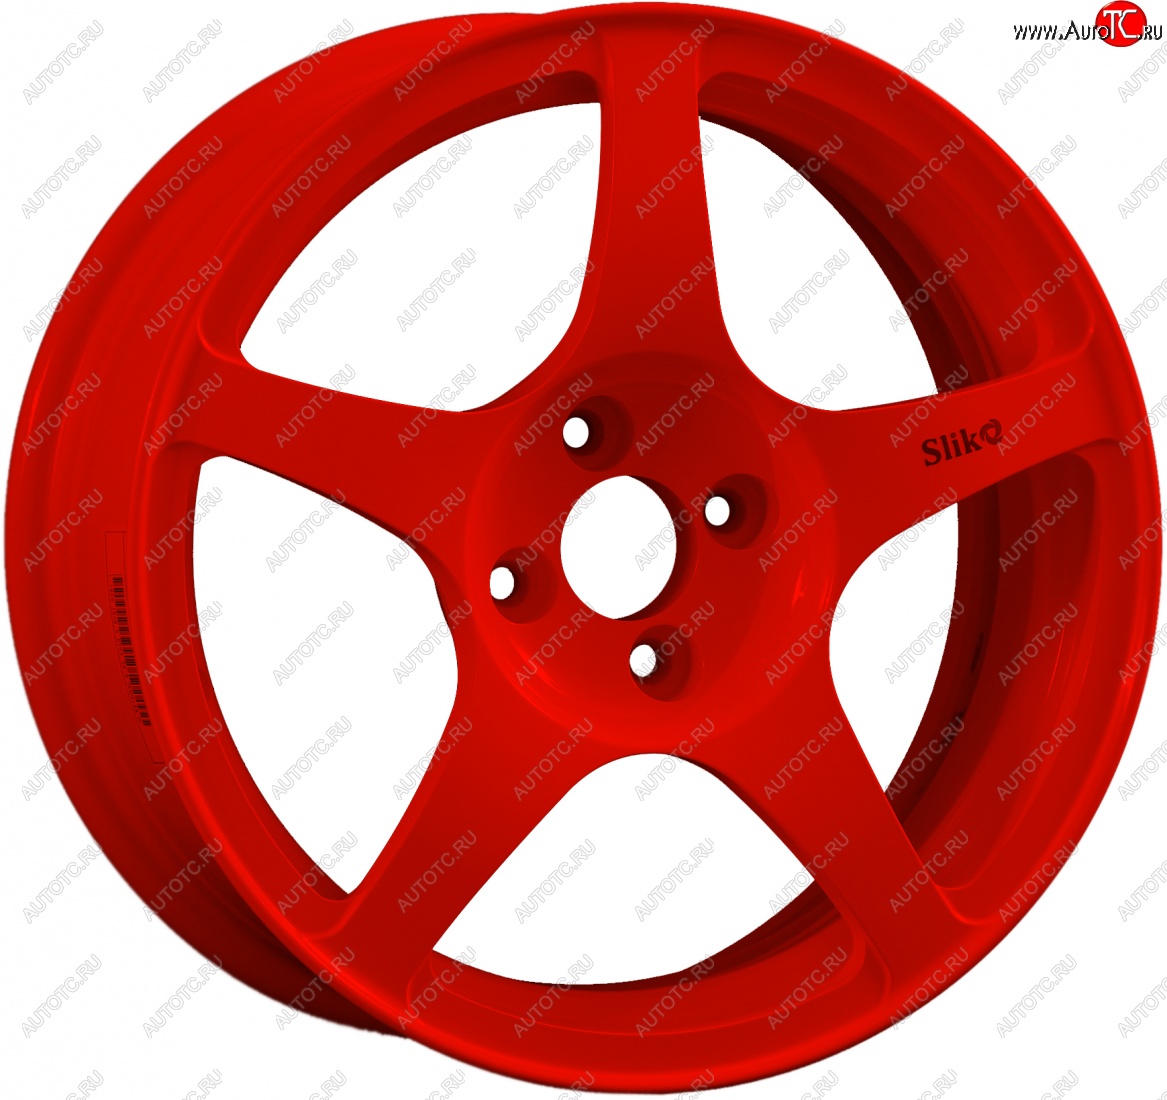 10 349 р. Кованый диск Slik classik R16x6.5 Красный (RED) 6.5x16 Mitsubishi Delica 4 рестайлинг (1997-2007) 5x114.3xDIA0.0xET40.0 (Цвет: RED)